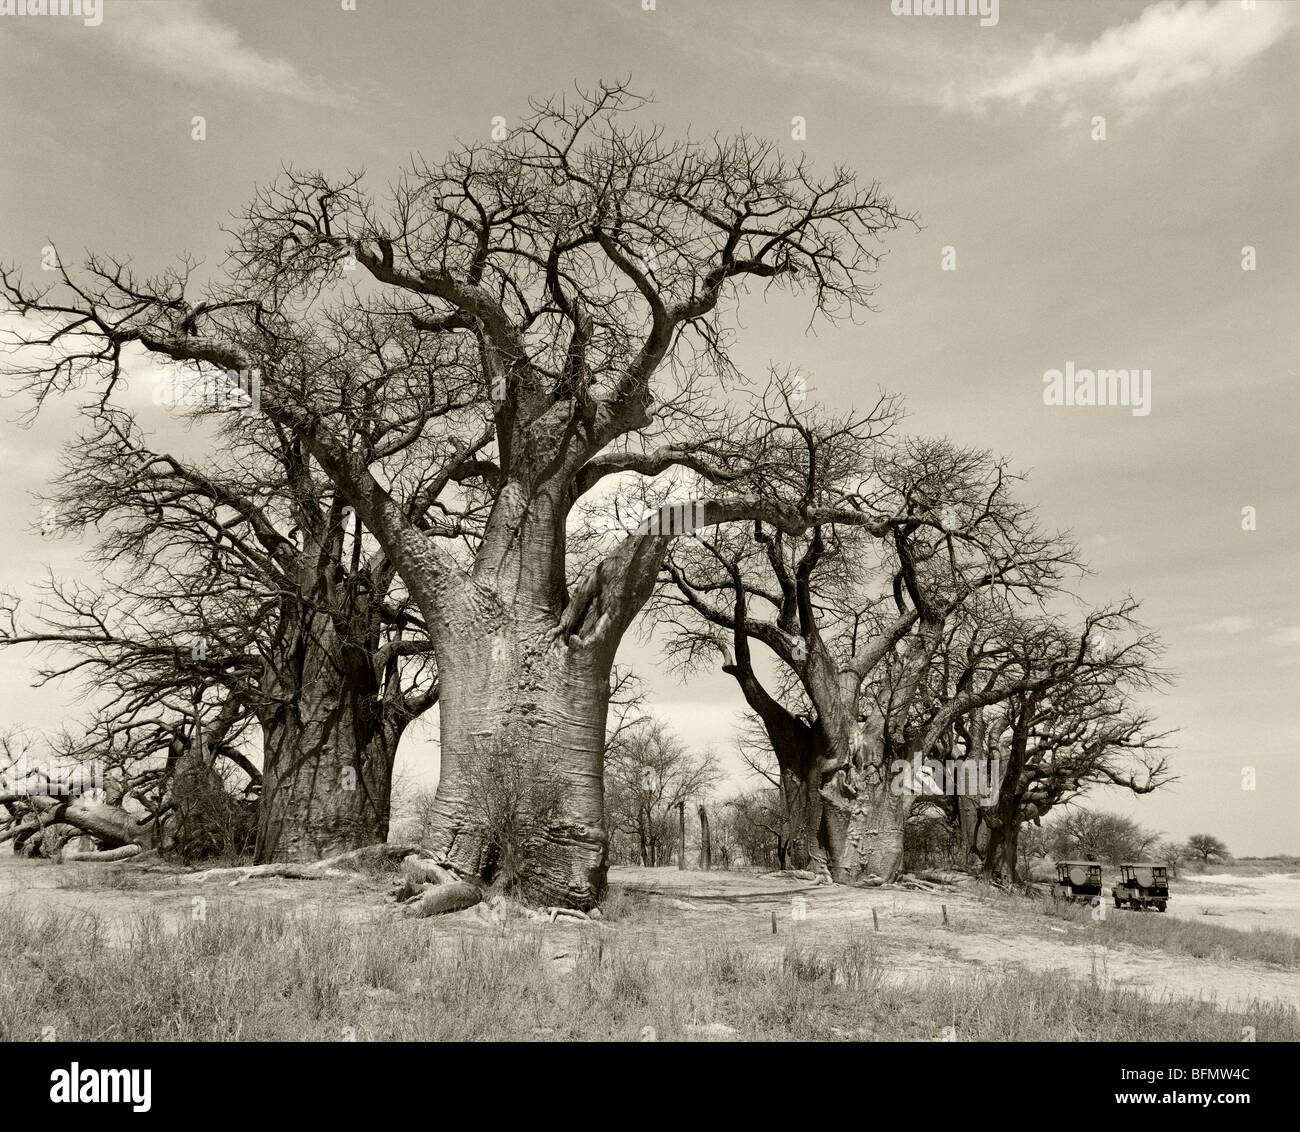 Il Botswana. Baines' baobab, isolata ceduo di antichi baobab nel deserto del Kalahari. Foto Stock